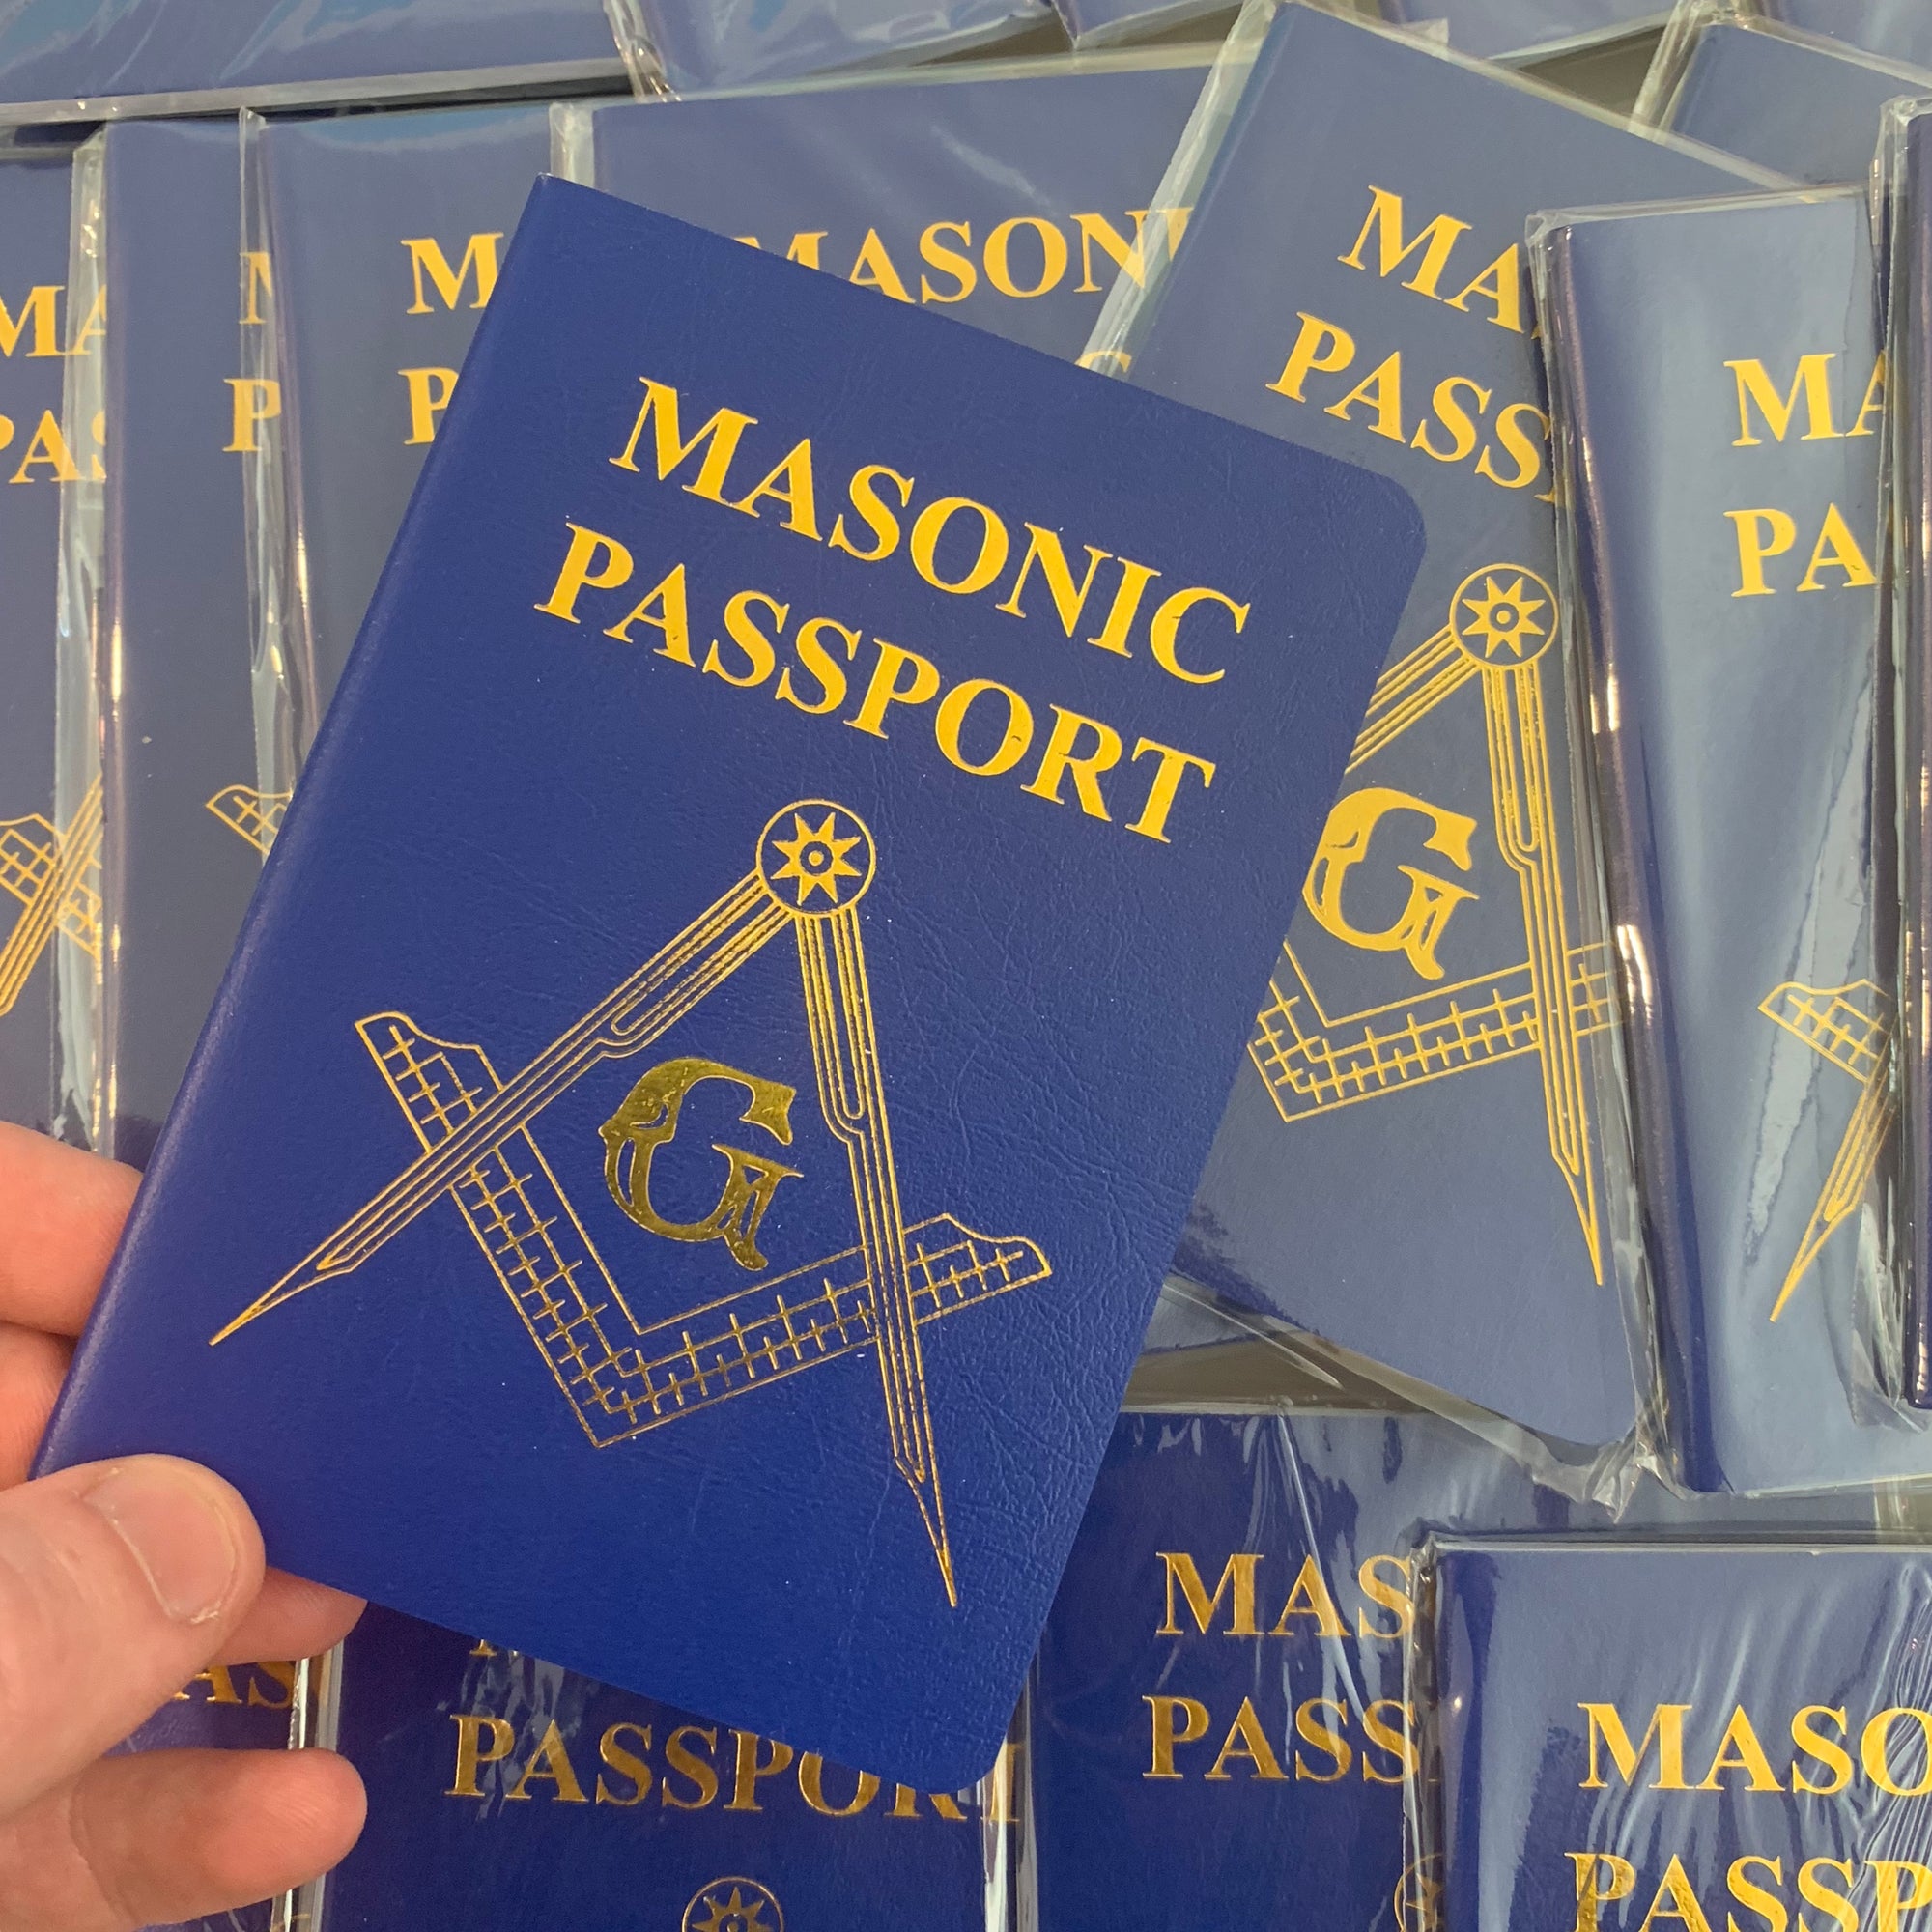 Introducing the Masonic Passport